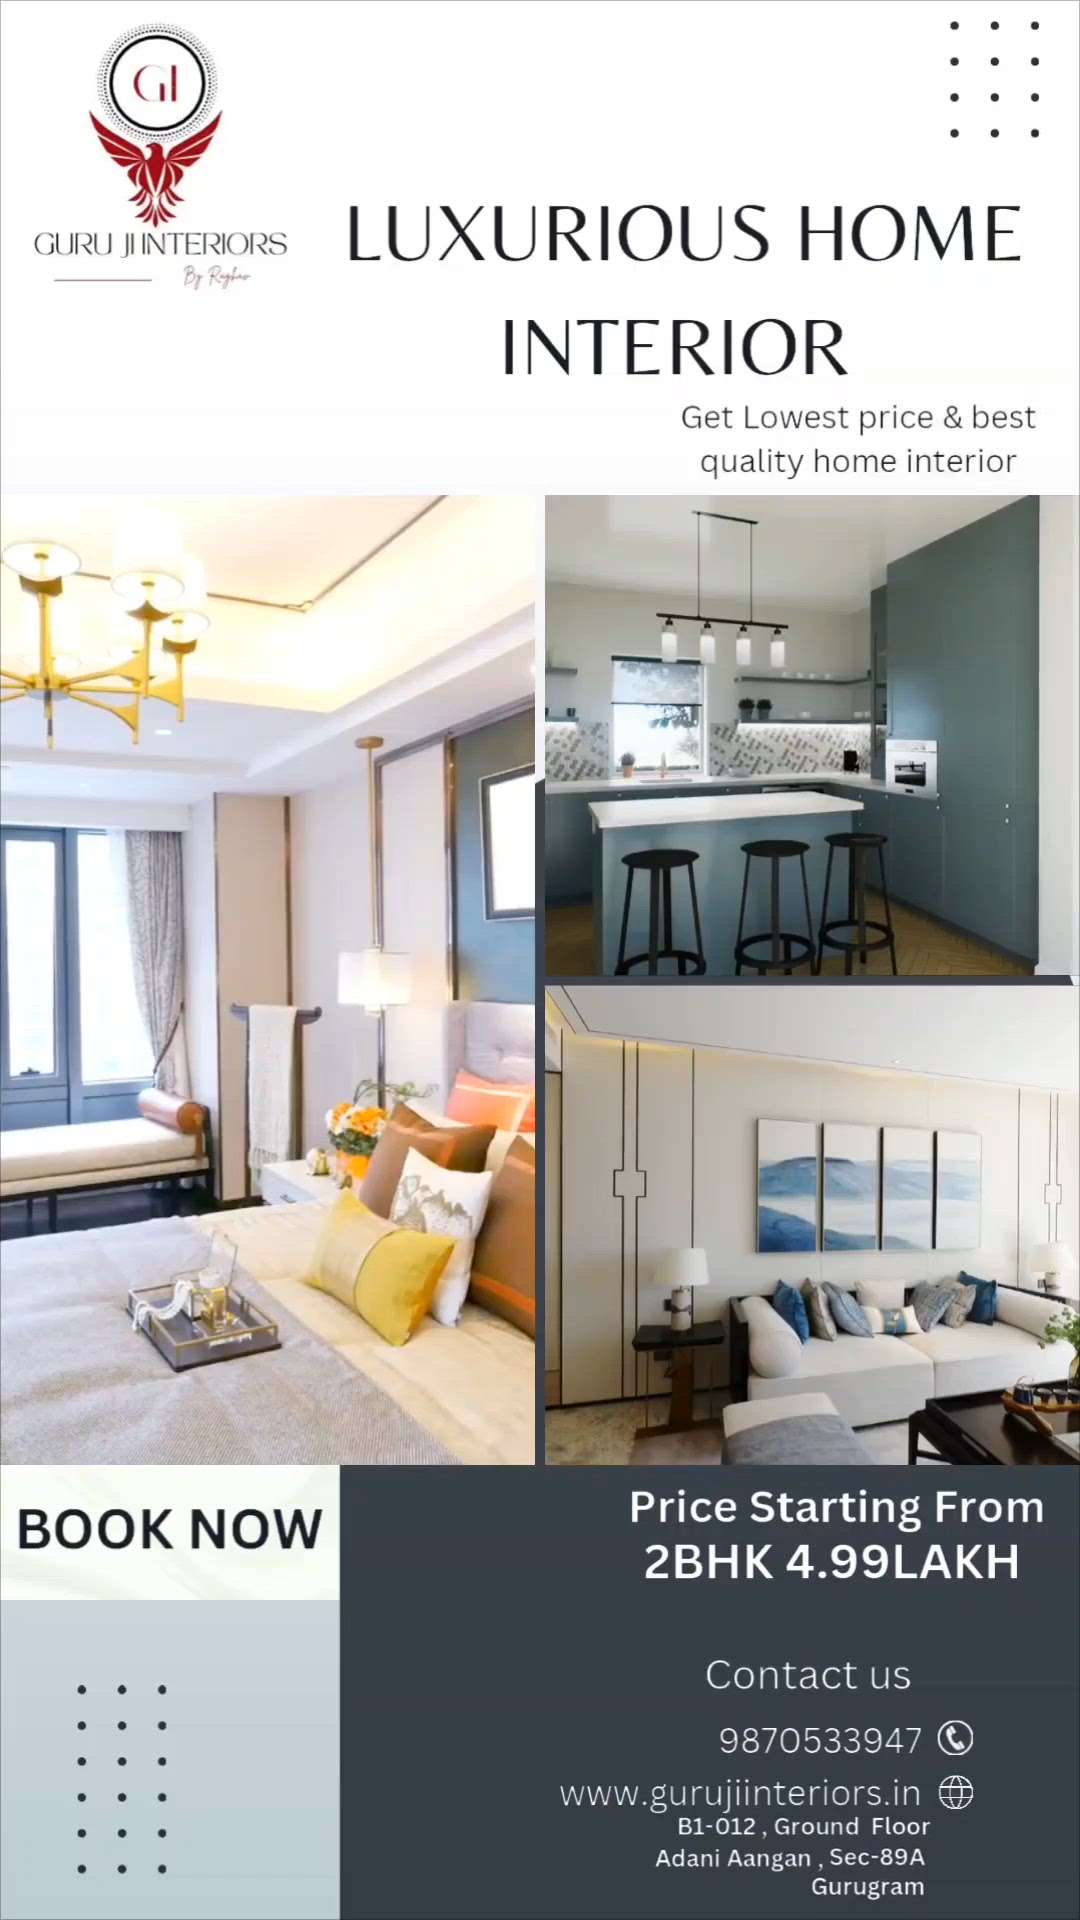 Luxurious Home Interior 
@ Looking for interior Designers?
Get Lowest price &  best quality home interiors💫
.
Guru ji interiors
By Raghav
Call - 9870533947 
#gurujiinteriors
#Interiordesign #luxuryhomes
#PerfectInterior #homedecore